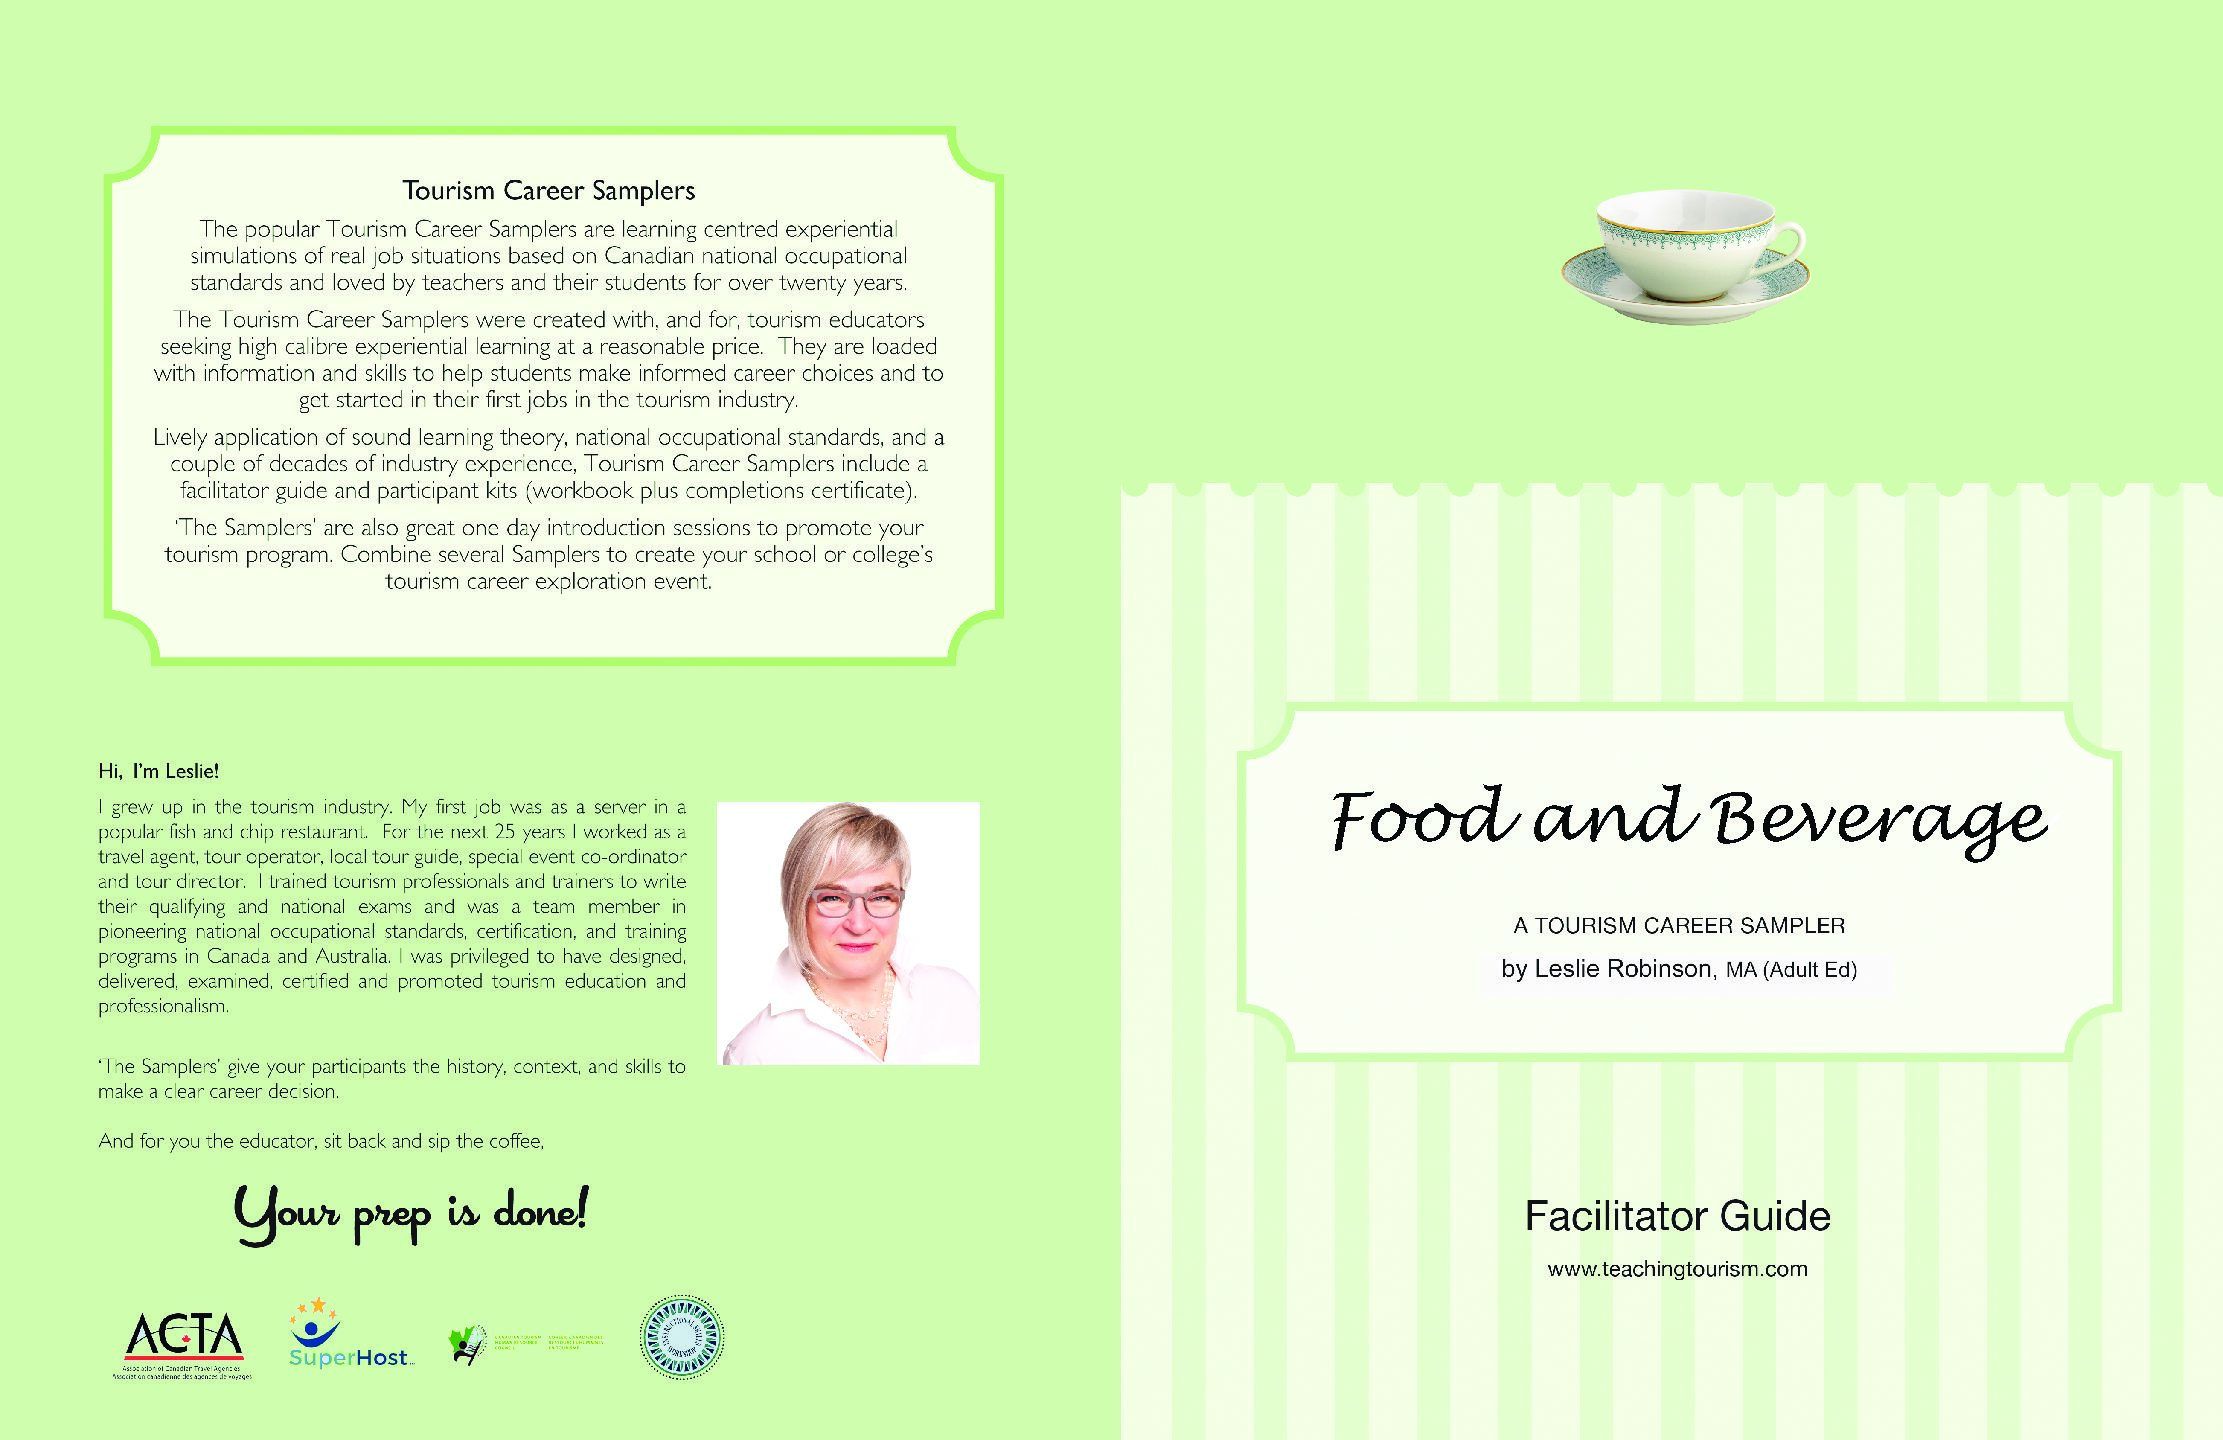 Food and Beverage Server Facilitator Guide and Workbook